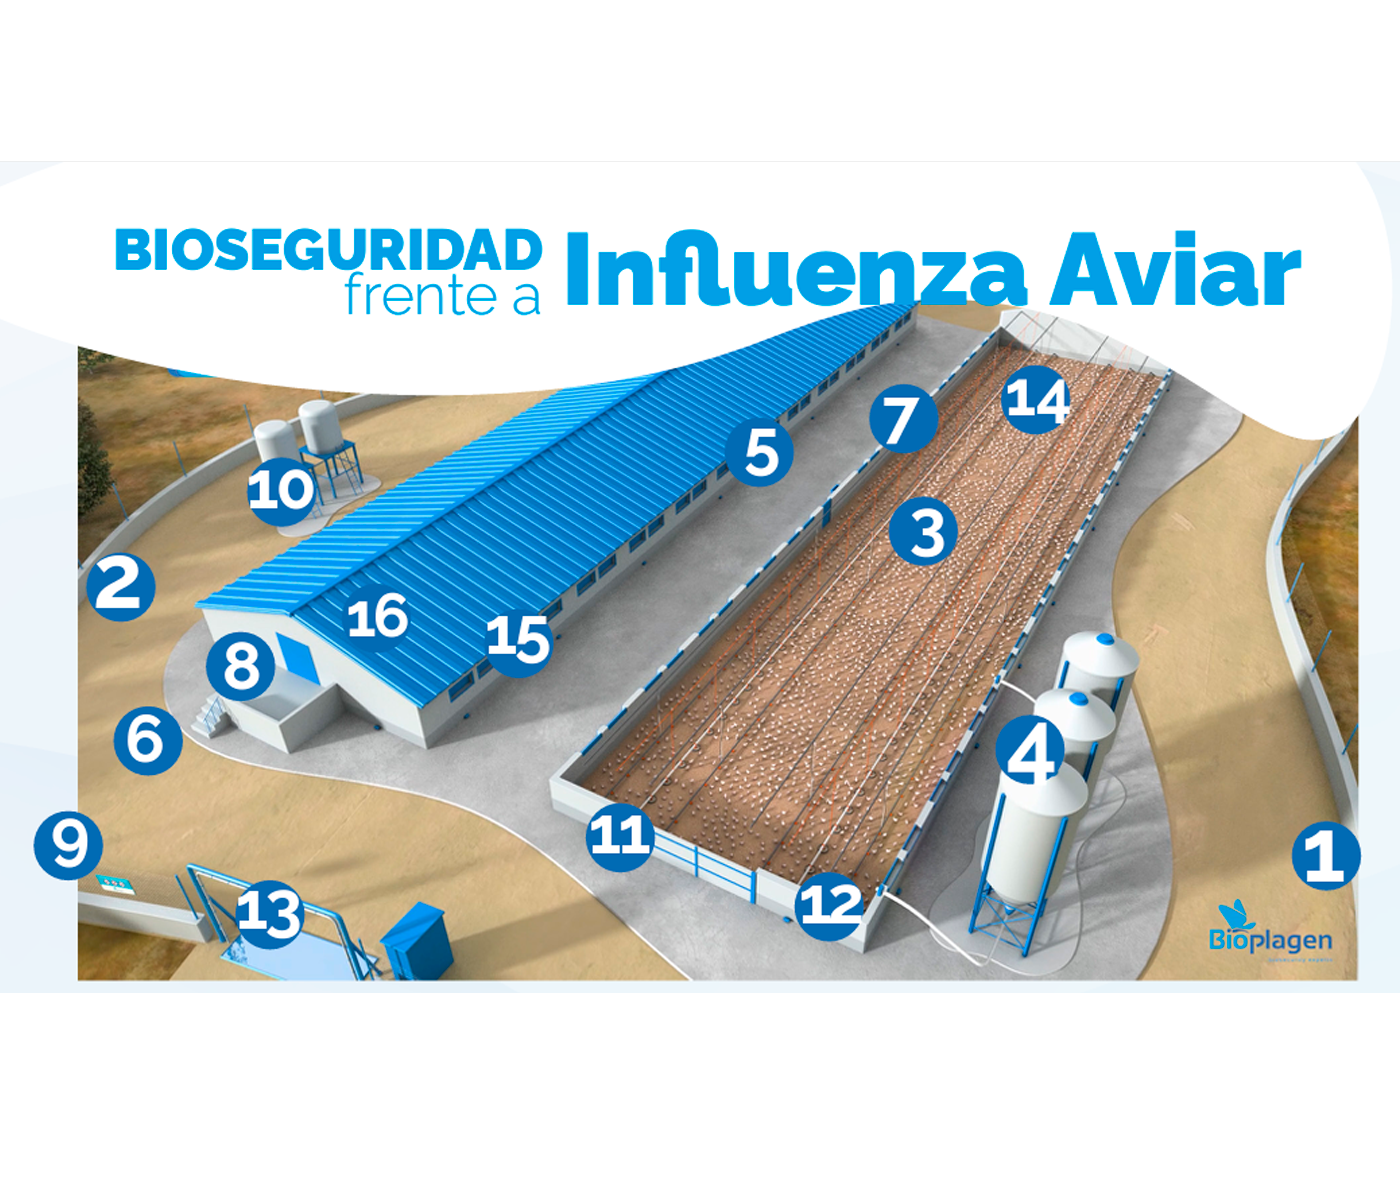 Bioseguridad  frente a Influenza Aviar